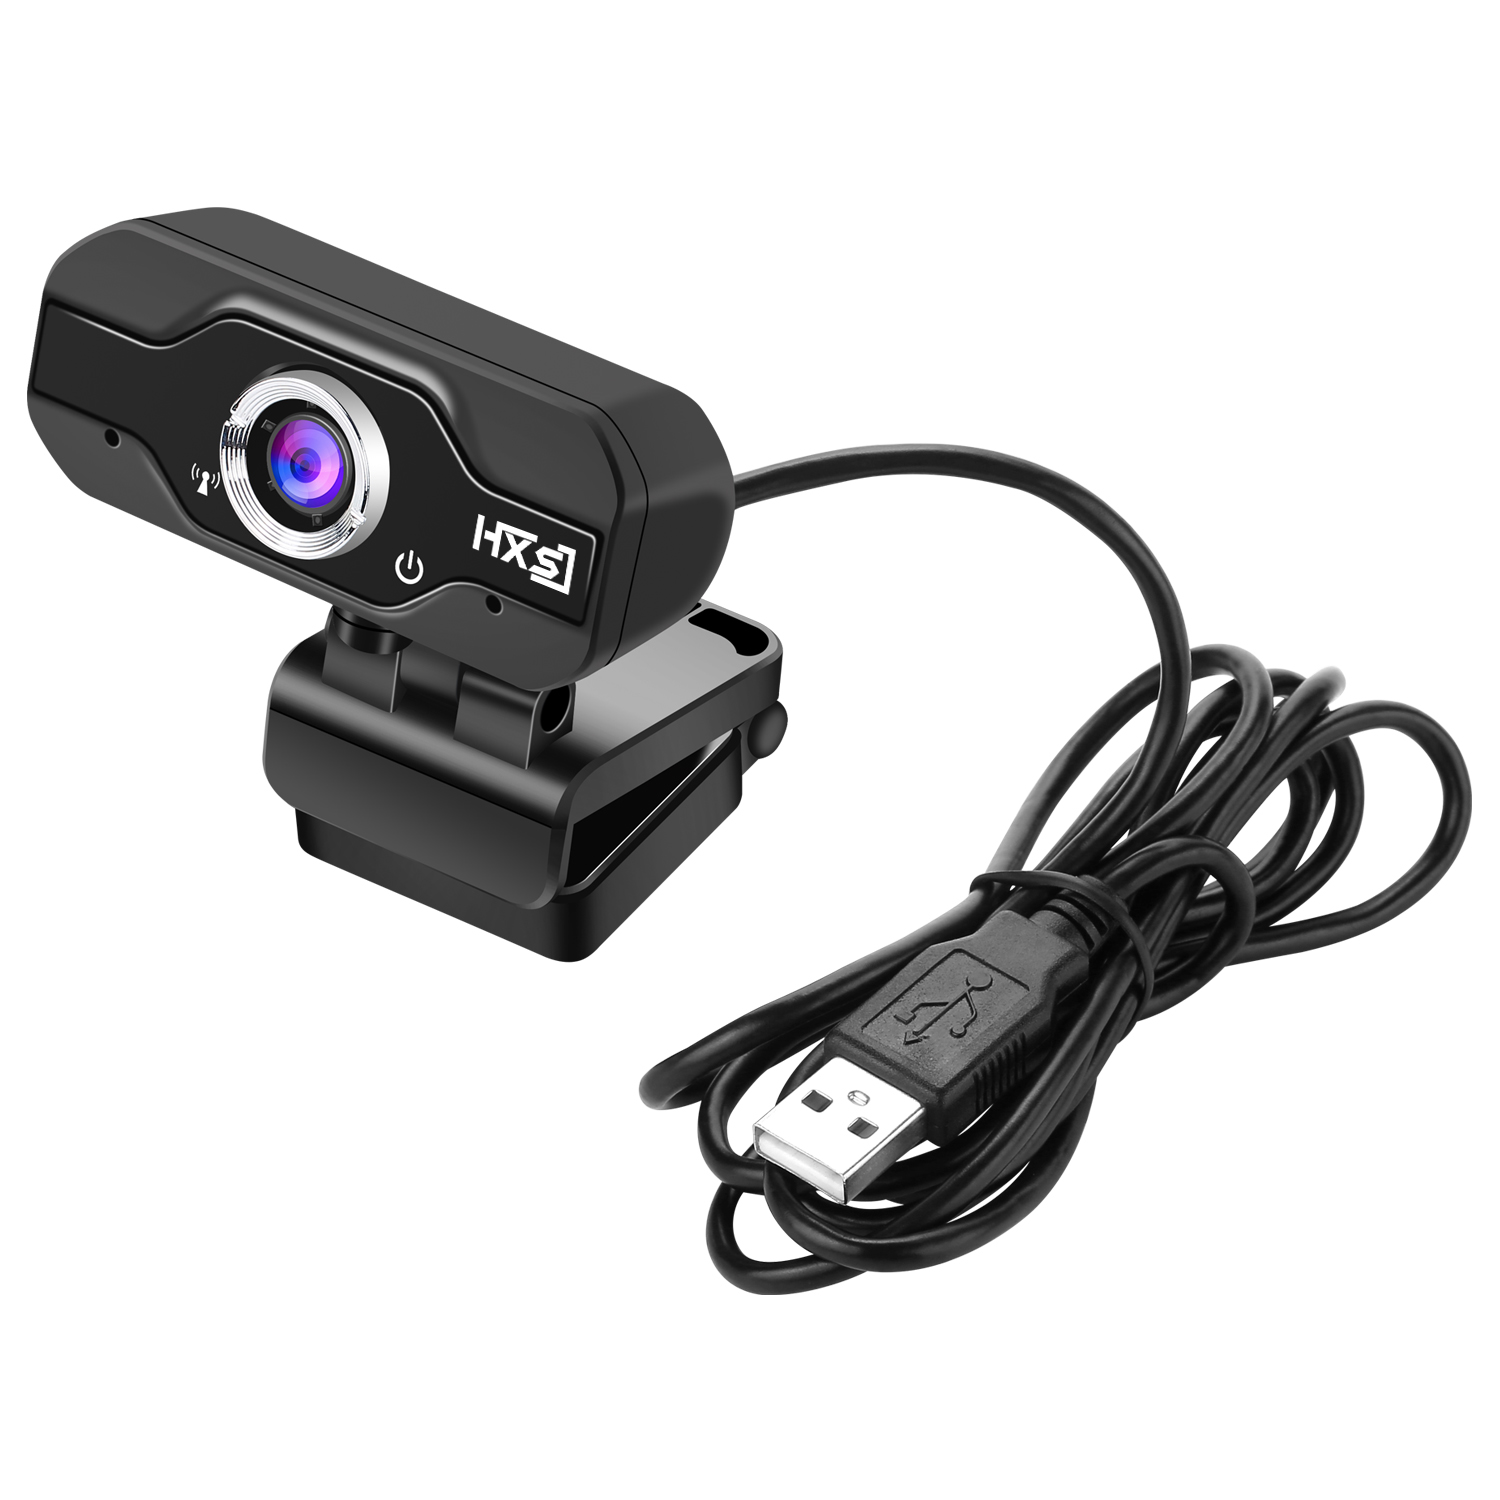 HXSJ HD 720P CMOS Sensor Webcam Built-in Microphone Adjustable Angle for Laptop Desktop 34